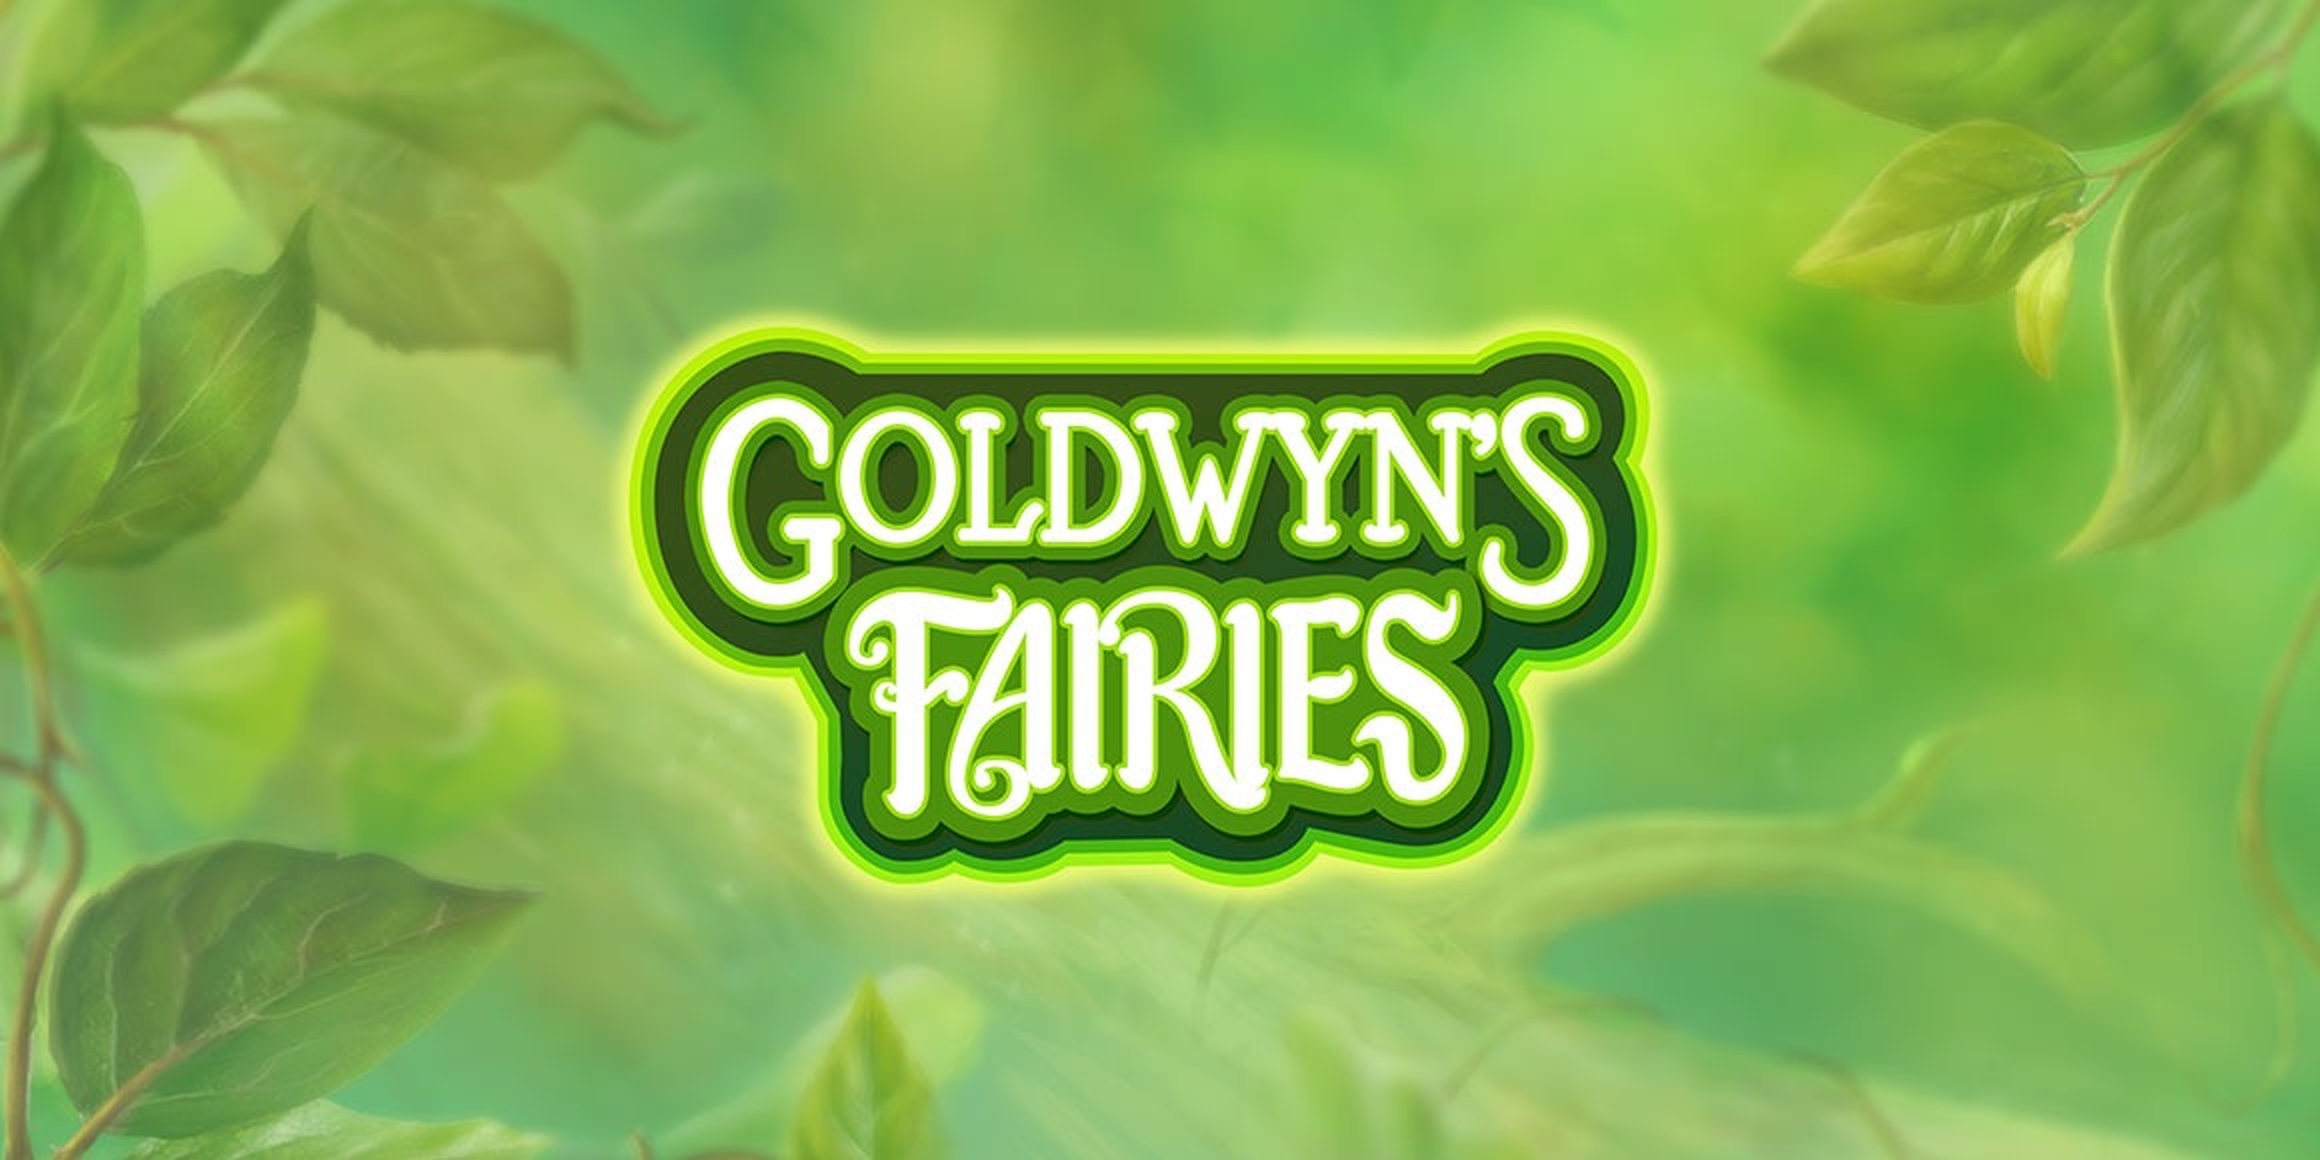 Goldwyn's Fairies demo